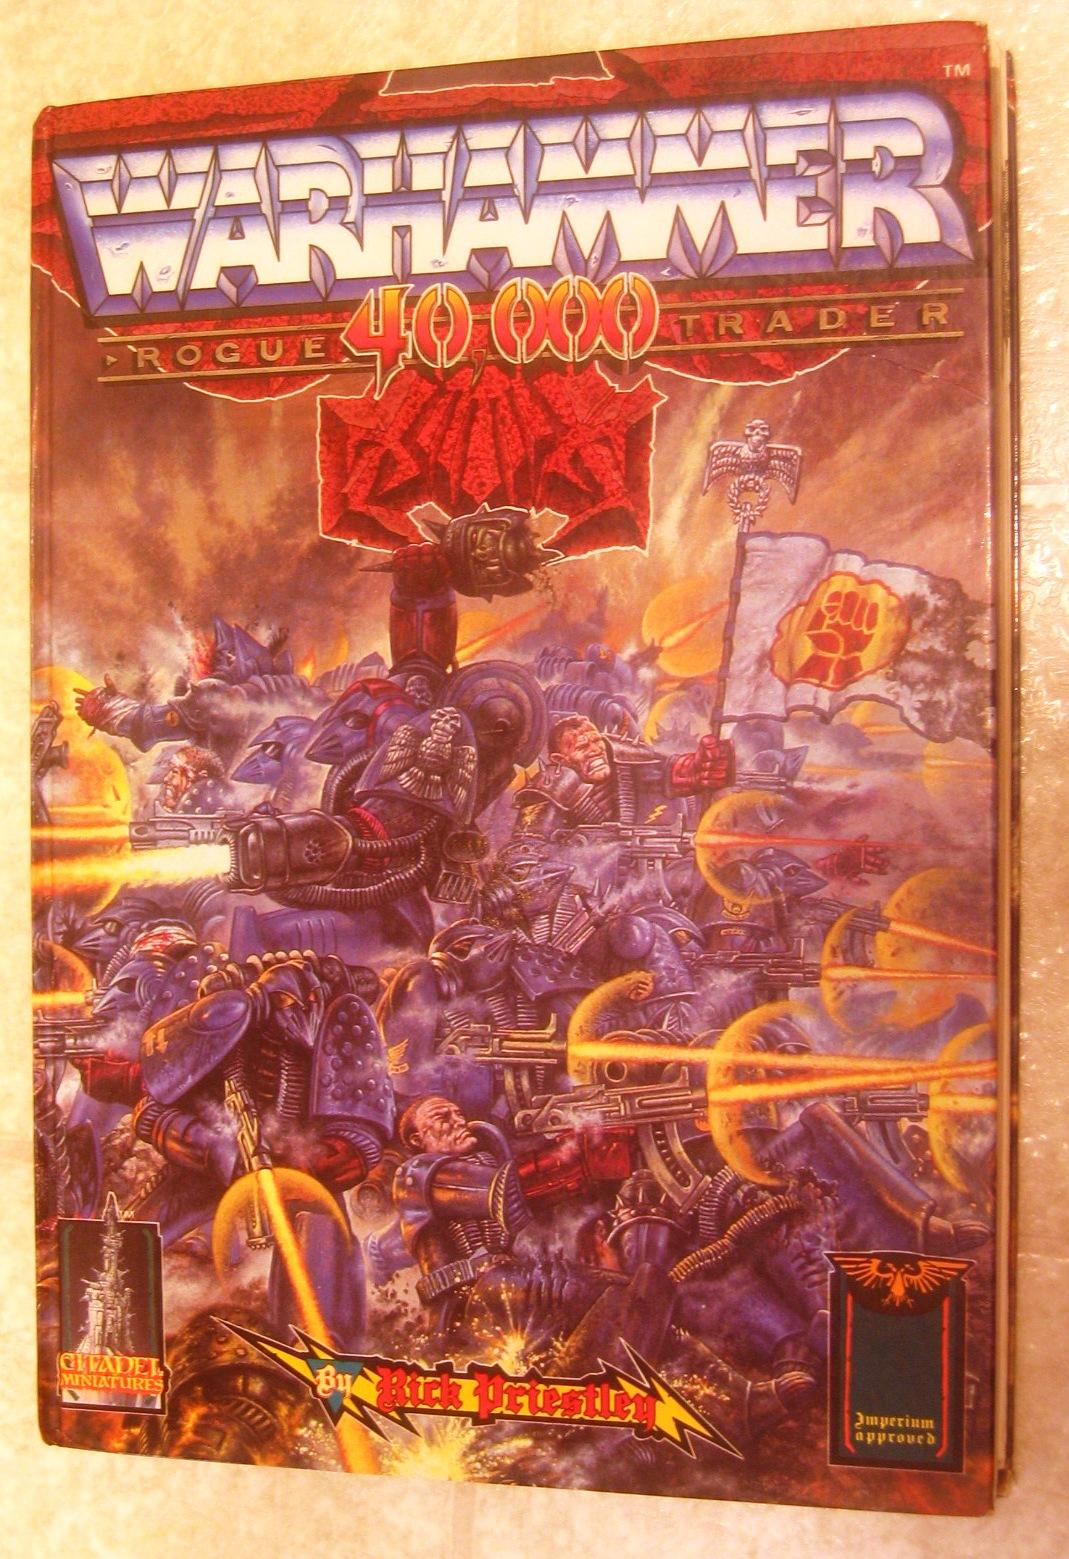 Warhammer 40,000 Rogue Trader 1987